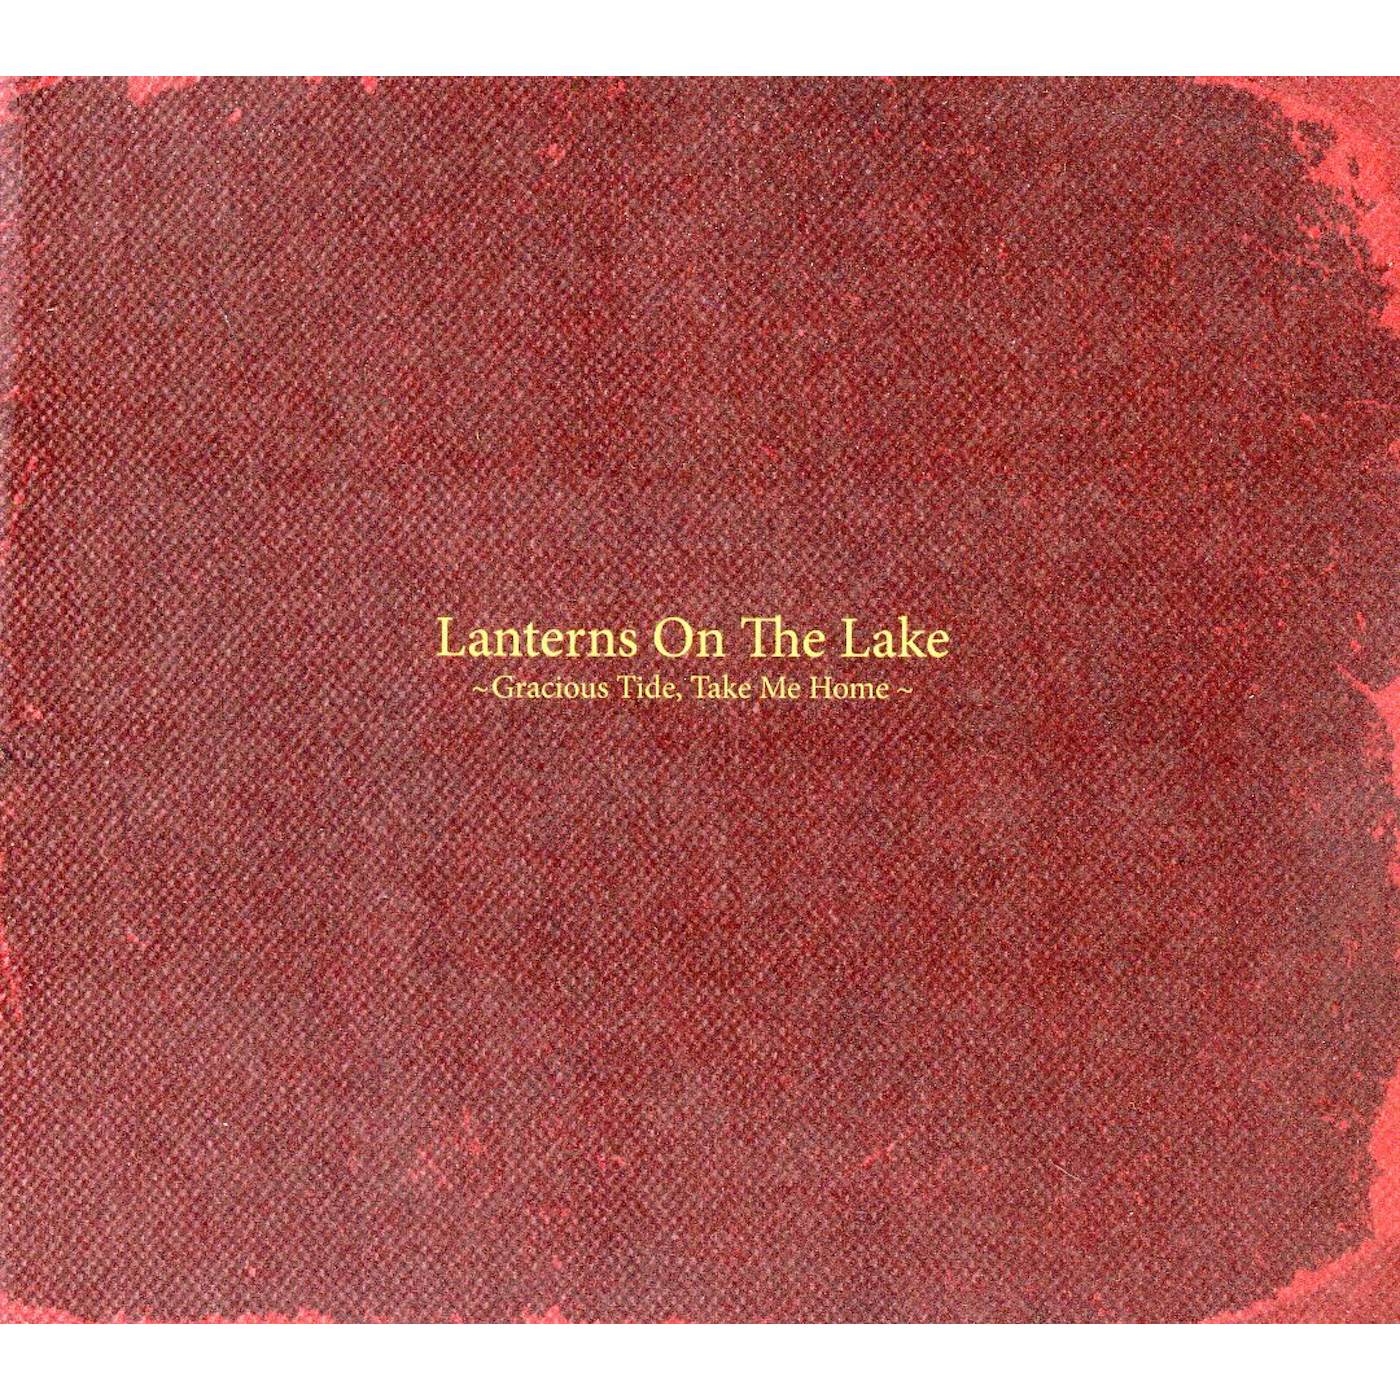 Lanterns on the Lake GRACIOUS TIDE TAKE ME HOME CD